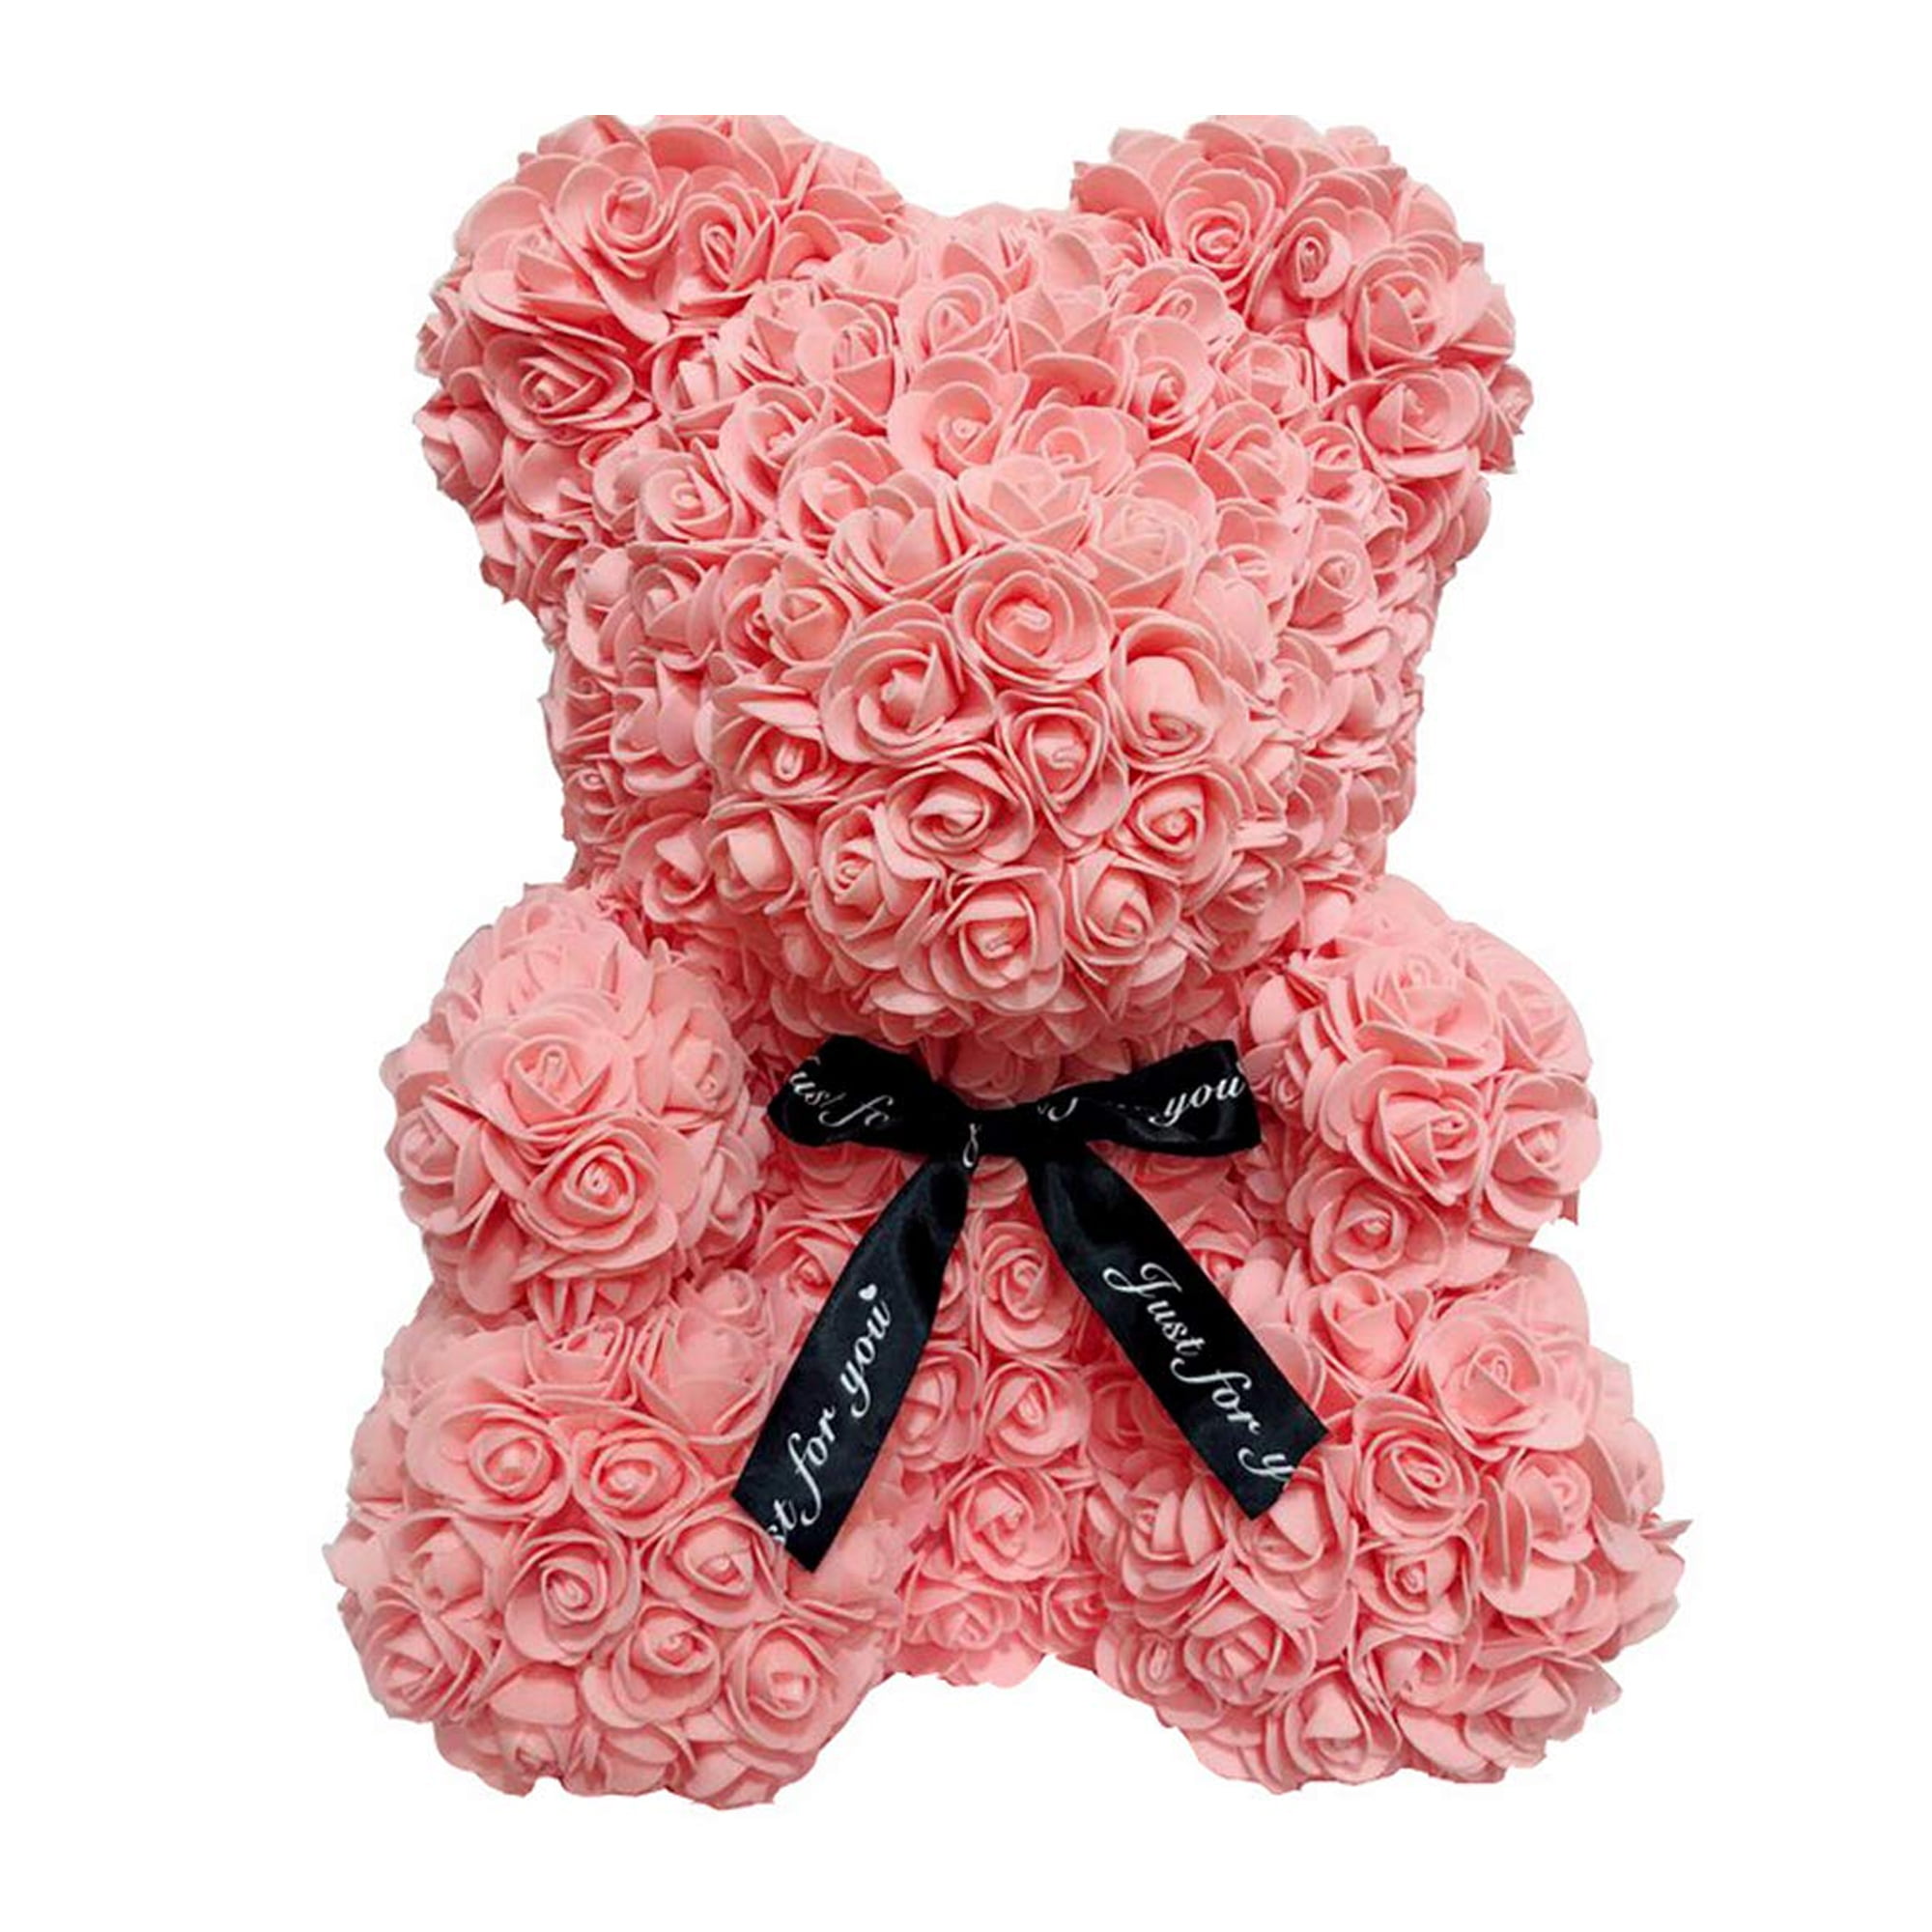 25cm Rose Bear Bear with Ribbon Valentine Birthday Anniversary Wedding Gifts US 